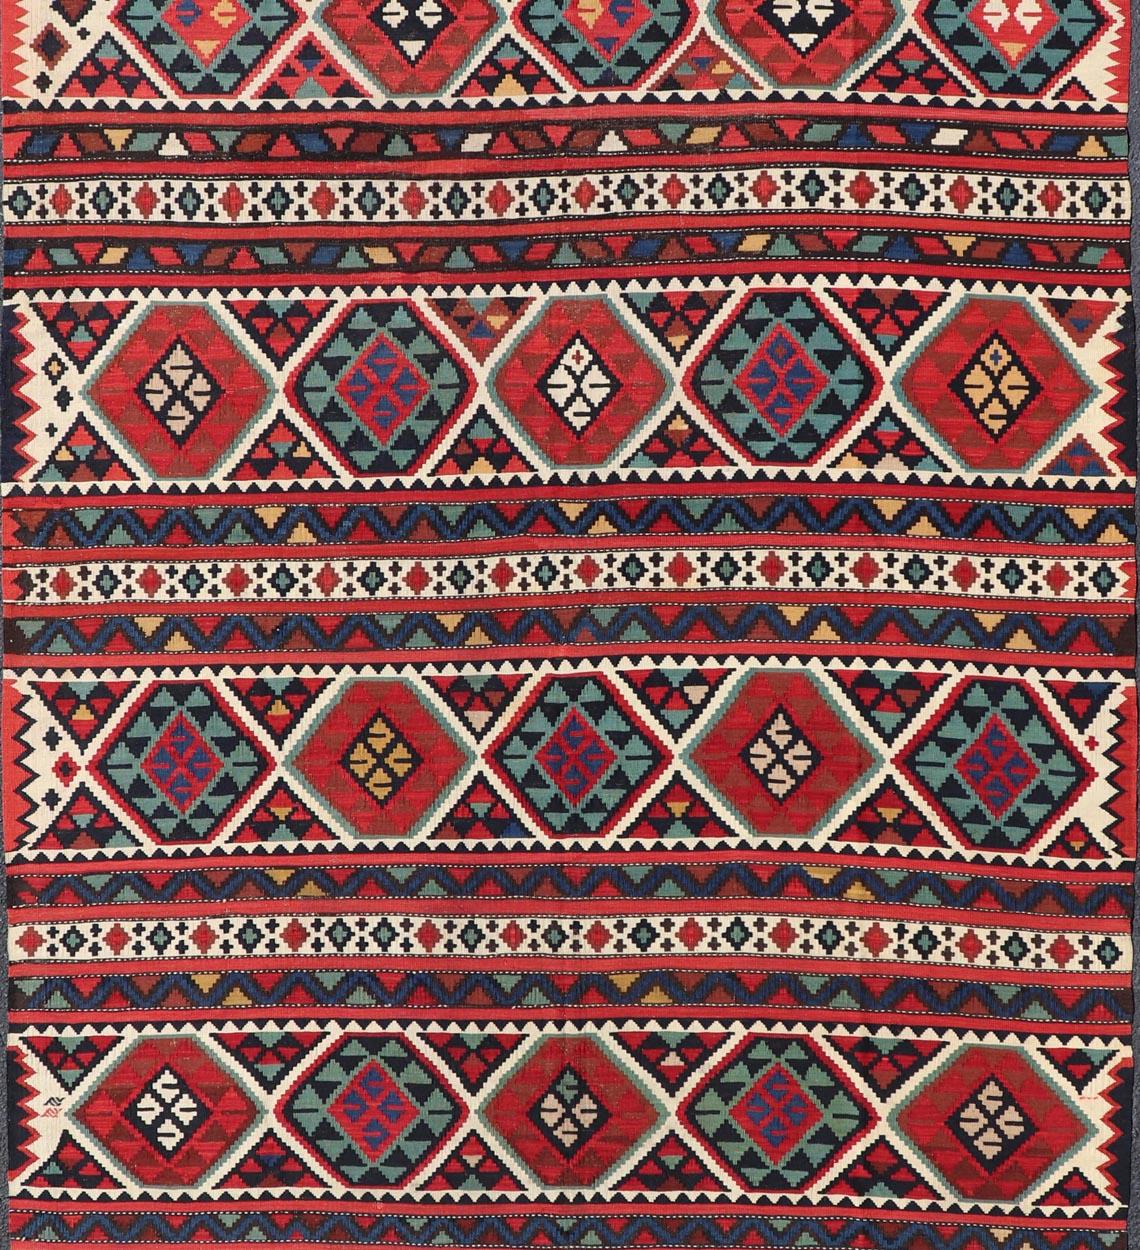 Antique Shirvan Kilim with Intricate Design in with Vibrant Colors, 19th century. Antique Shirvan Kilim Rug in with amazing intricacy and vibrant colors. Keivan Woven Arts / rug R20-1103, country of origin / type: Caucasus/ Shirvan , circa